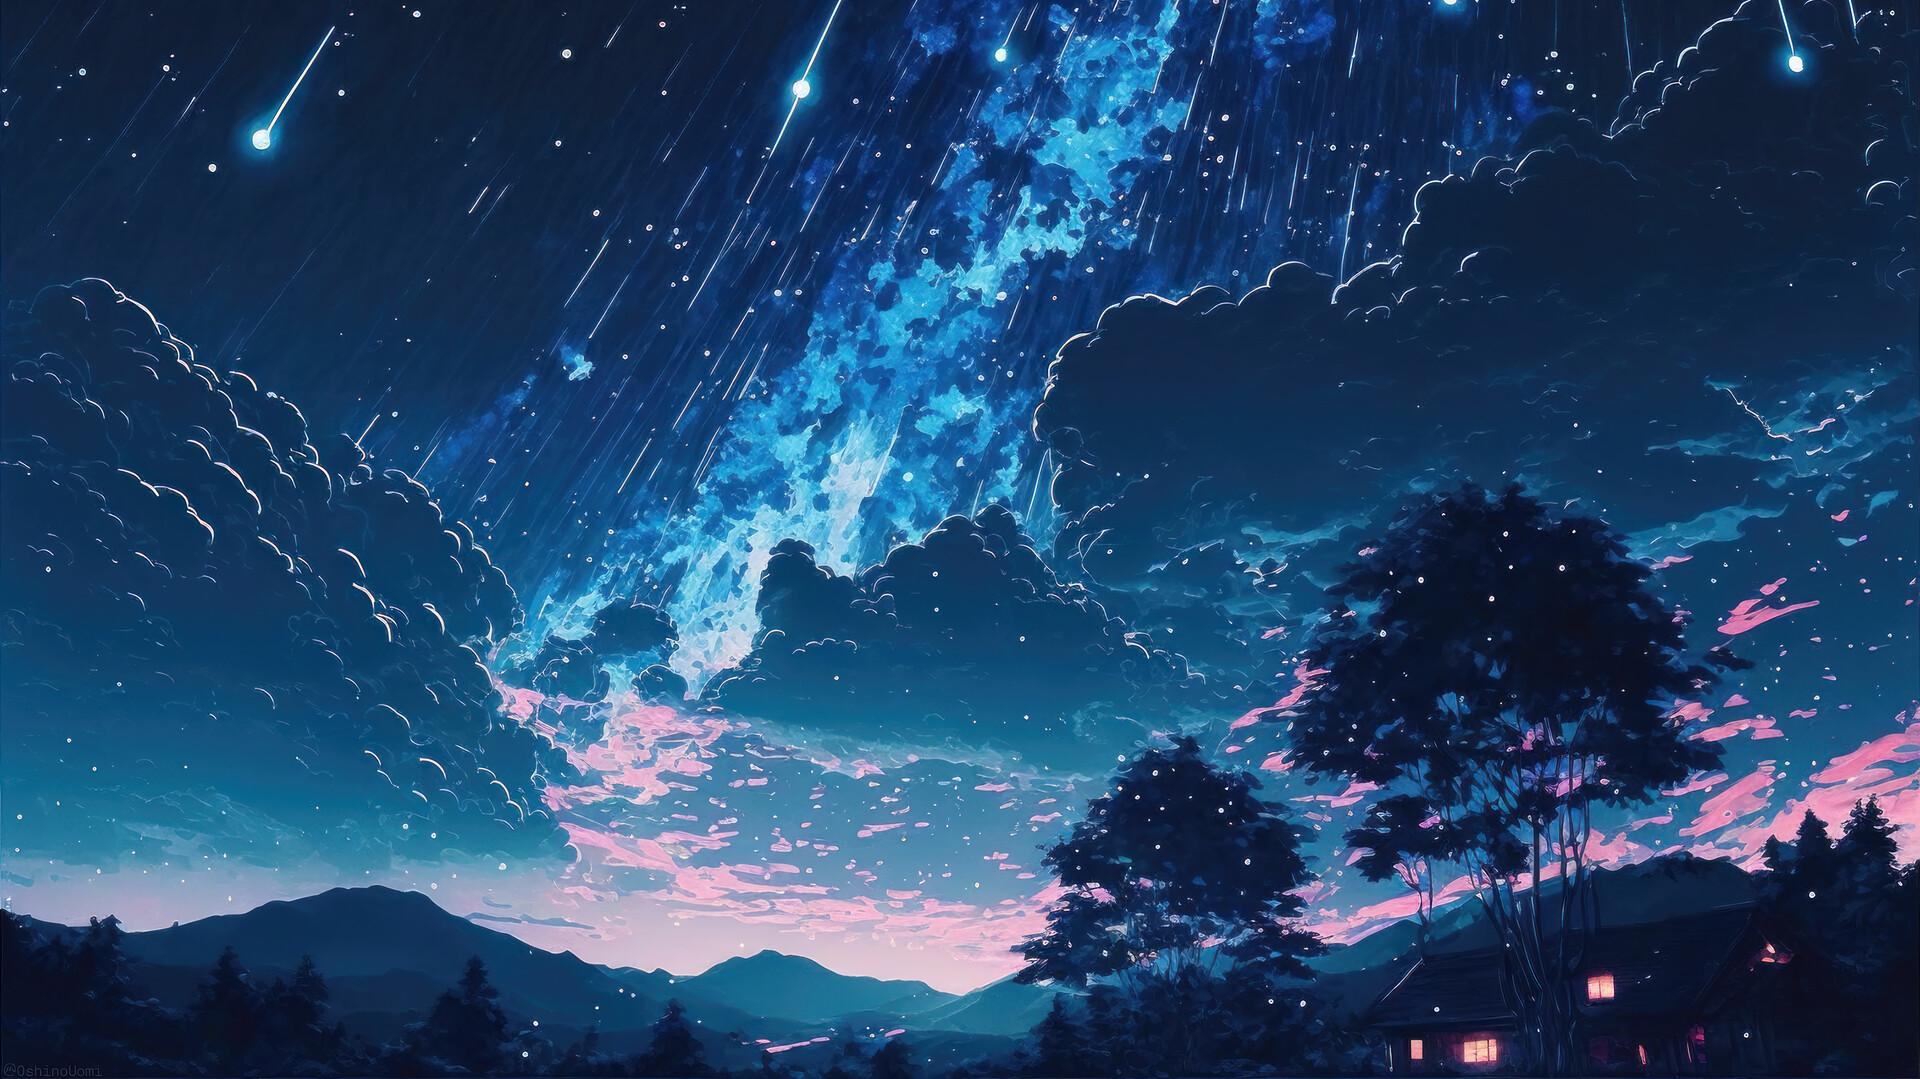 Night Sky Stars Clouds Scenery Landscape Anime 4k Wallpaper iPhone